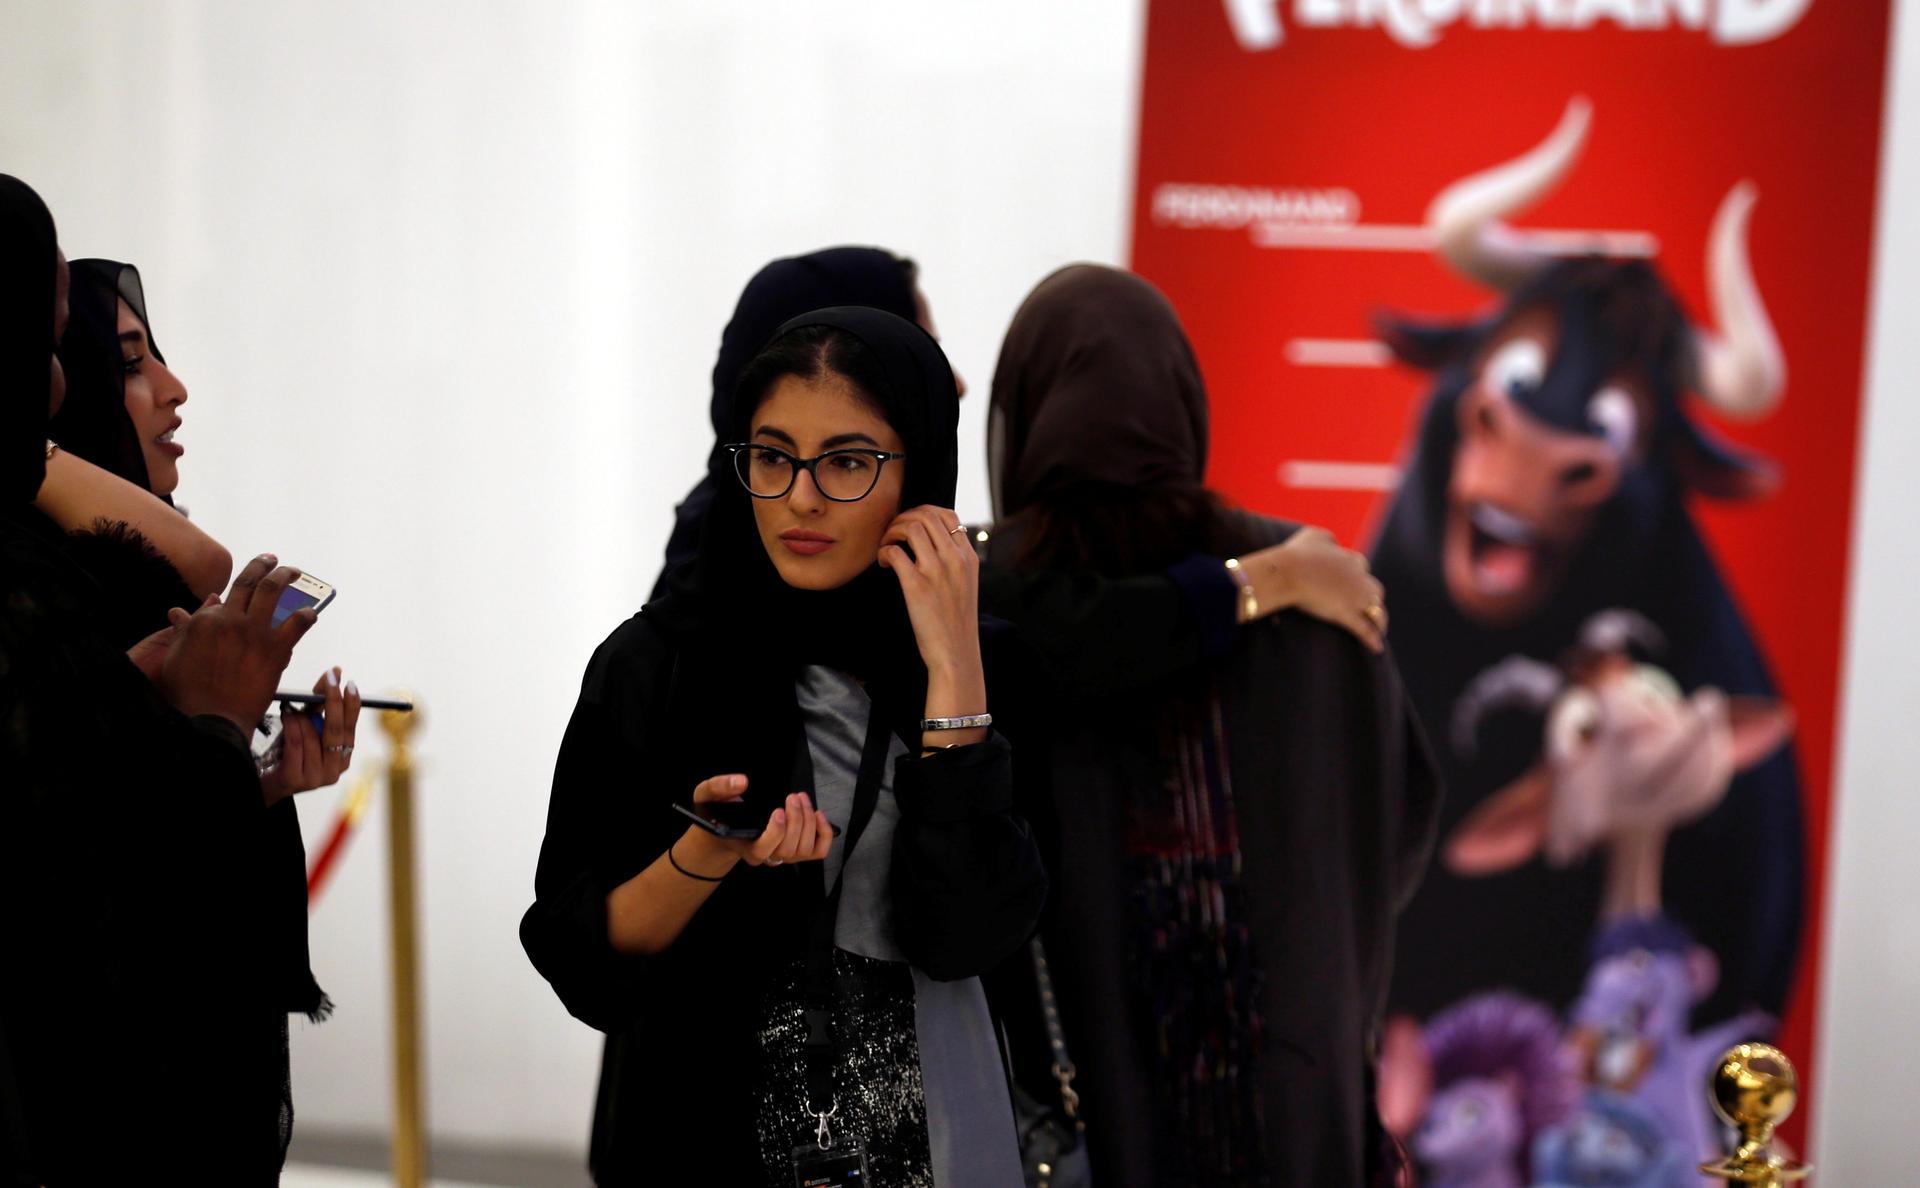 Saudi women attend the opening of a cinema at Riyadh Park mall, in Riyadh, Saudi Arabia April 30, 2018. 